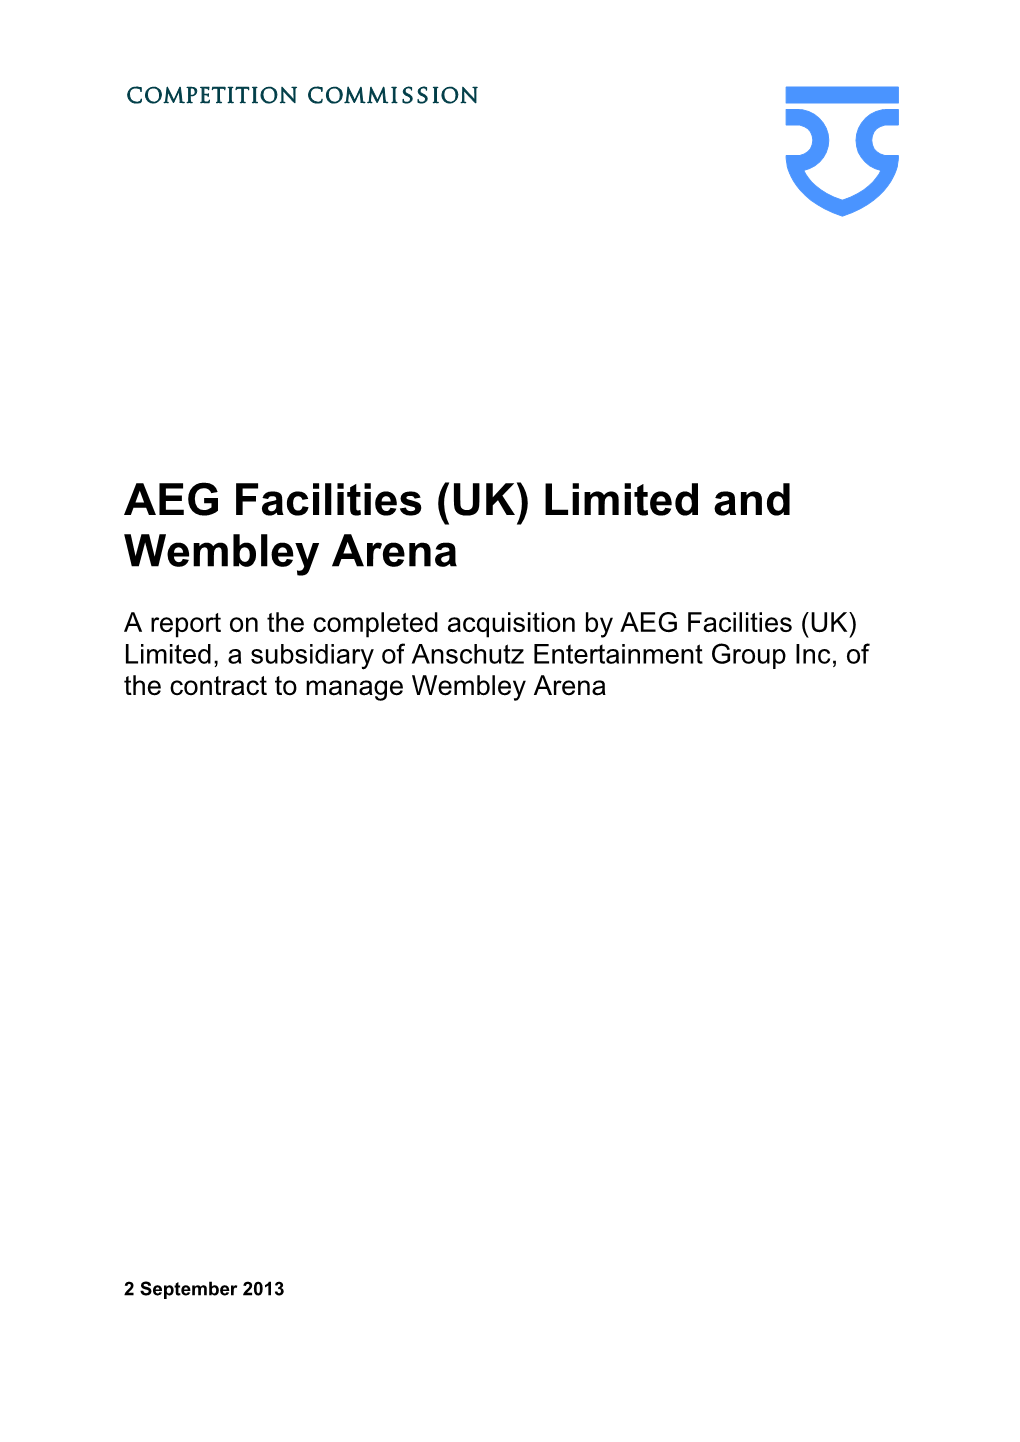 AEG Facilities (UK) Limited and Wembley Arena